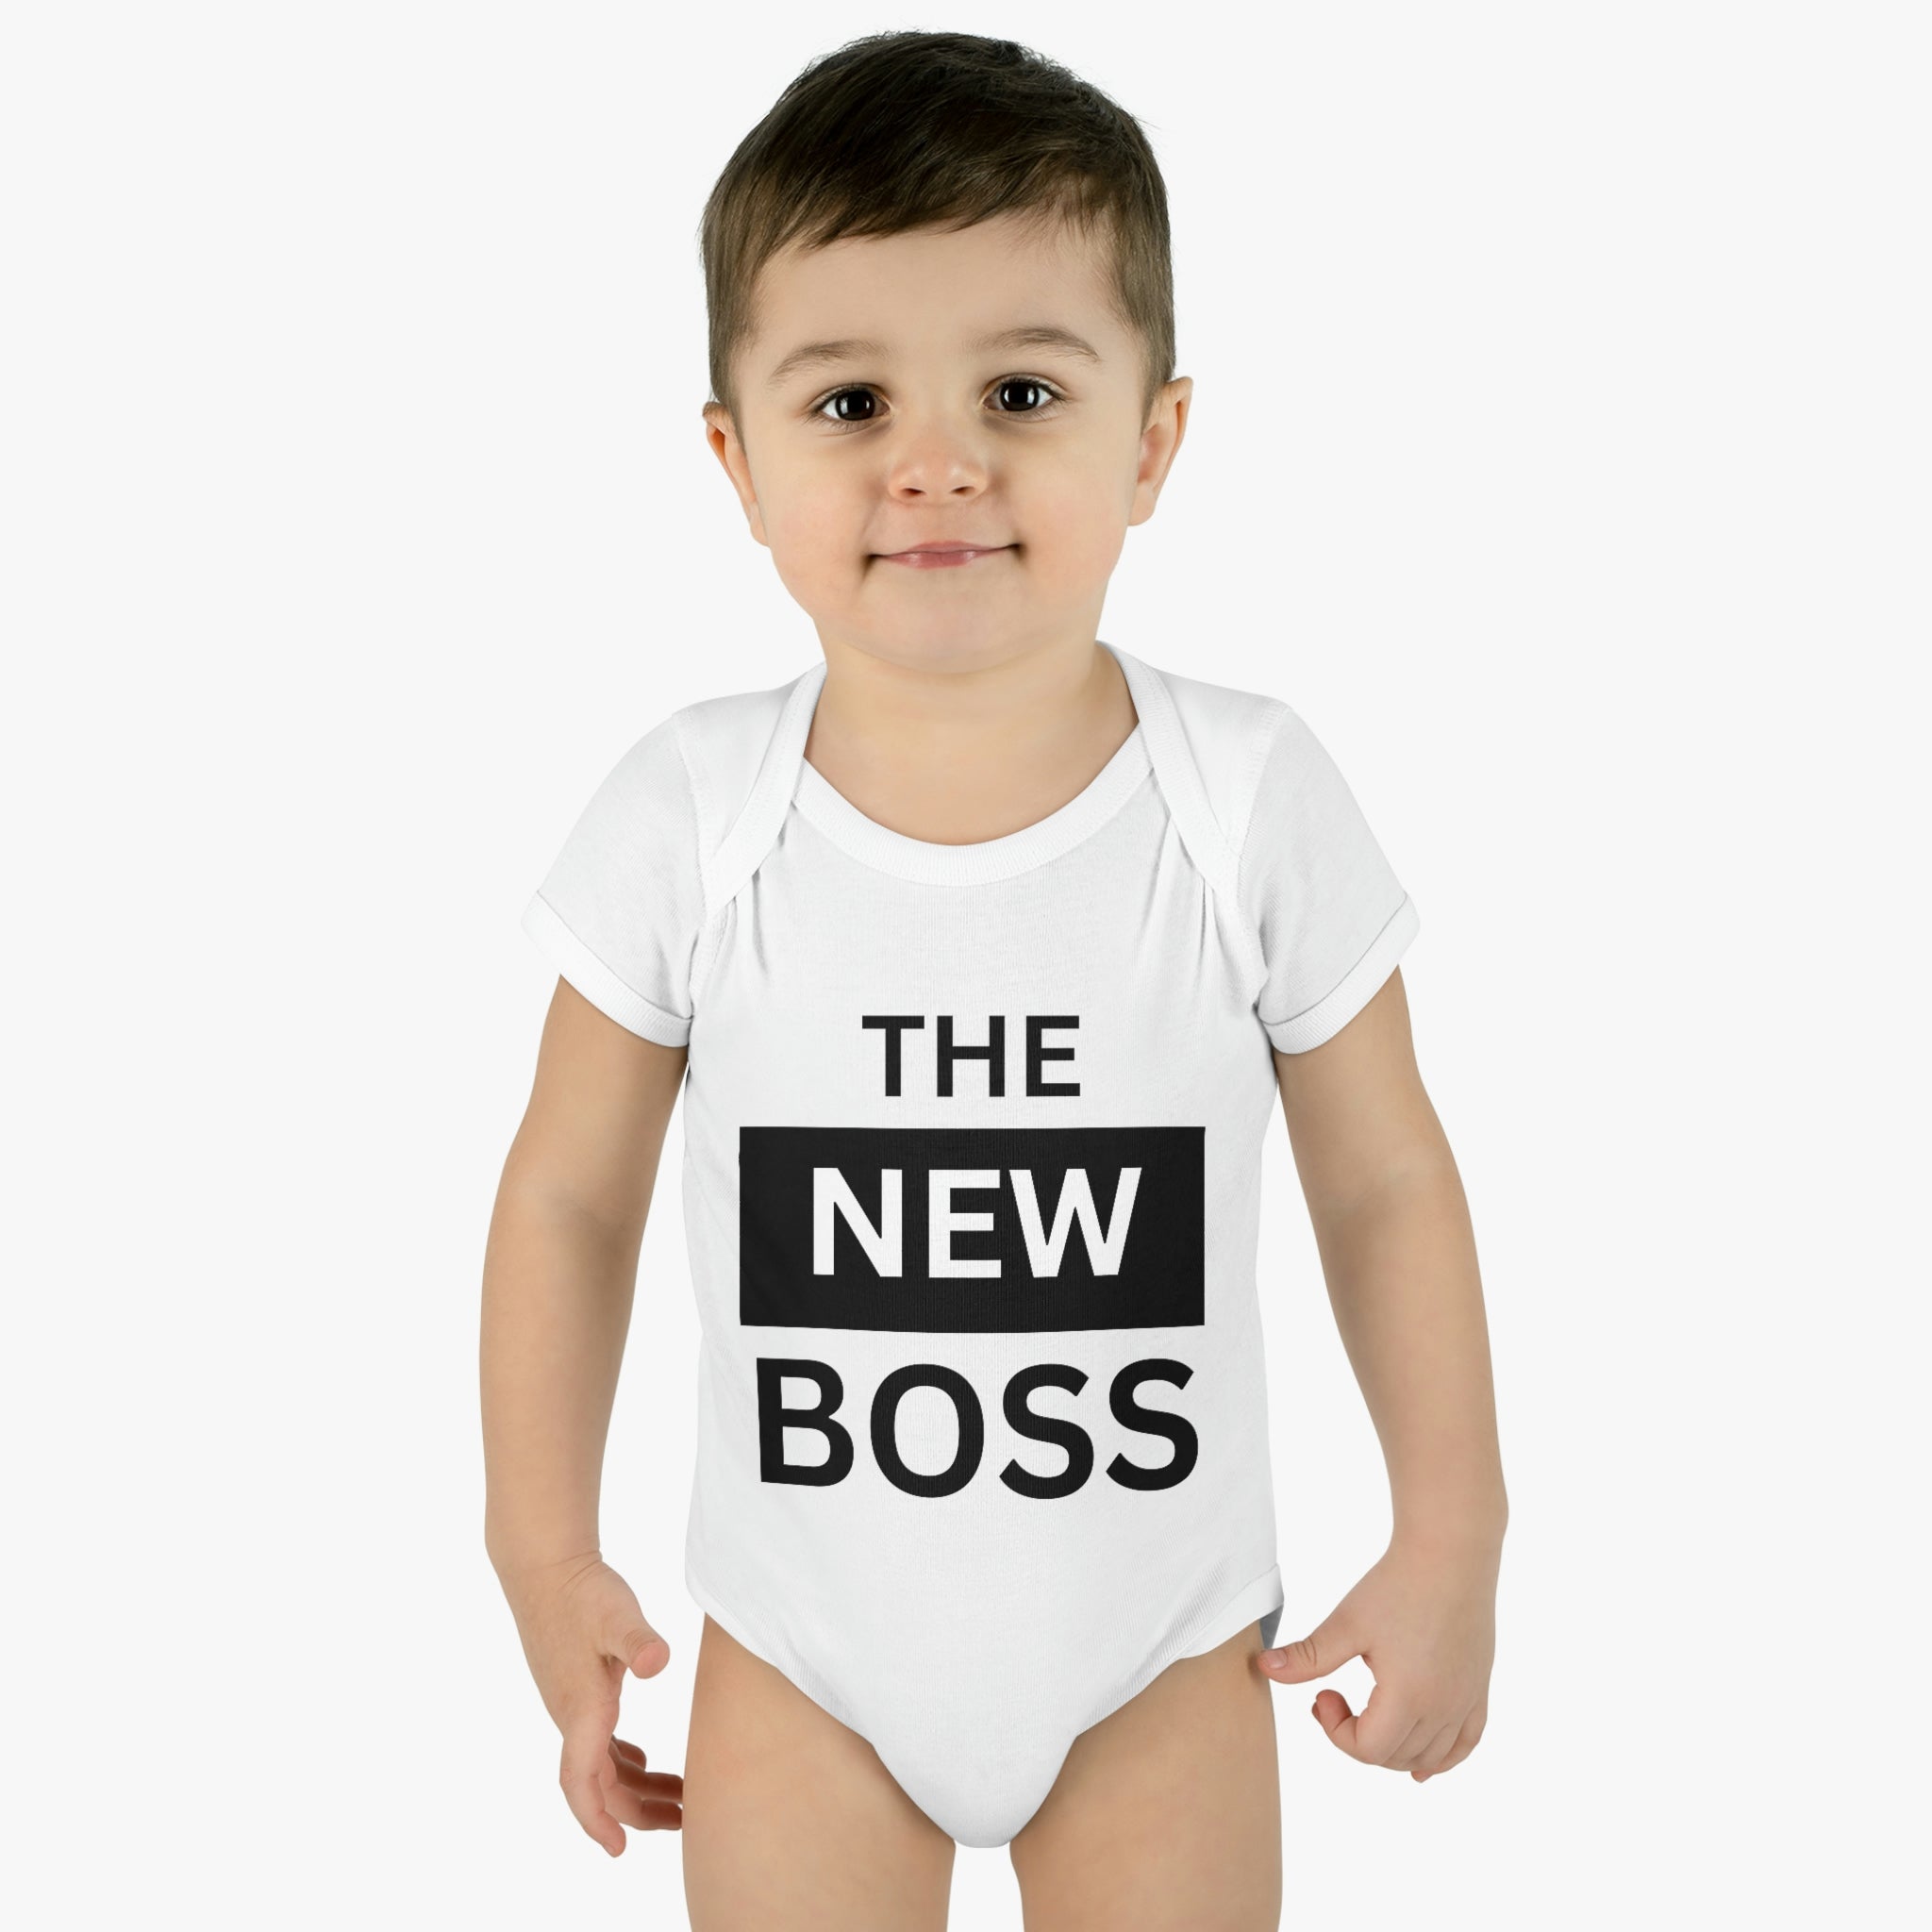 The New Boss Baby Bodysuit